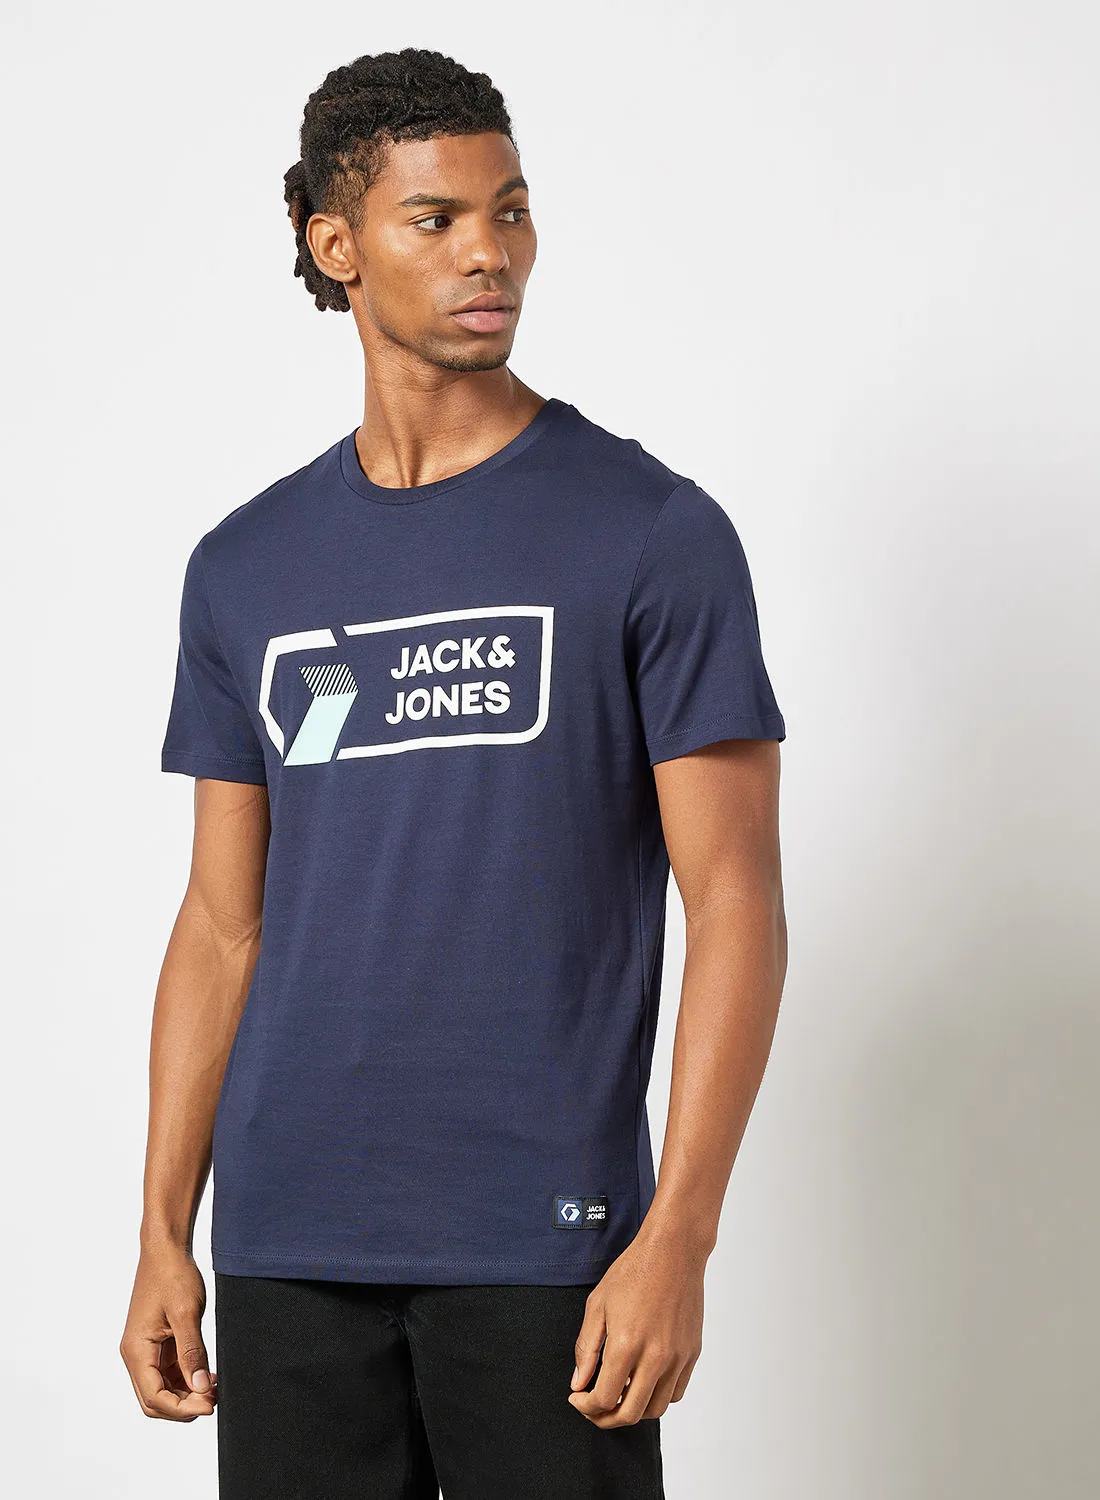 JACK & JONES Logo Detail T-Shirt